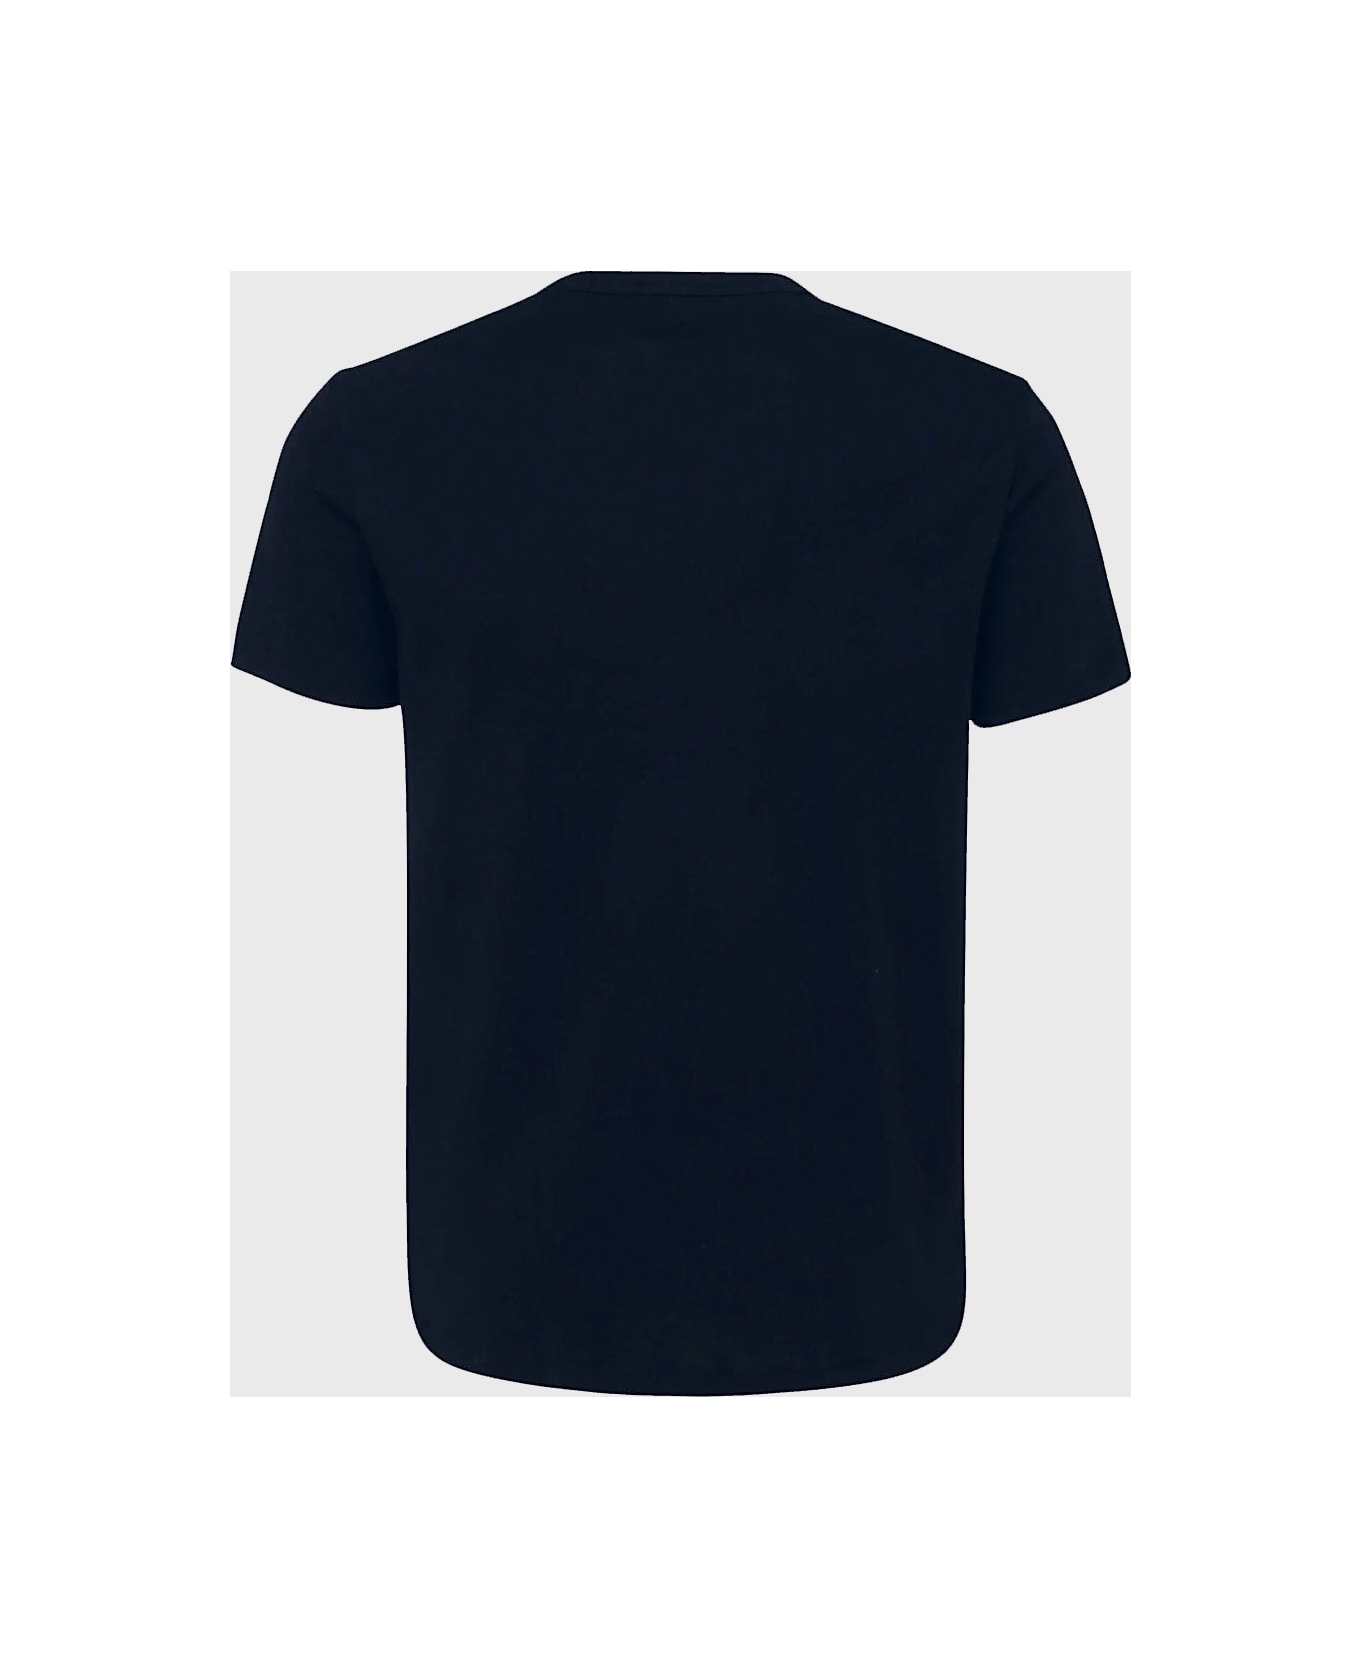 Tom Ford Navy Blue Cotton Blend T-shirt - Blue